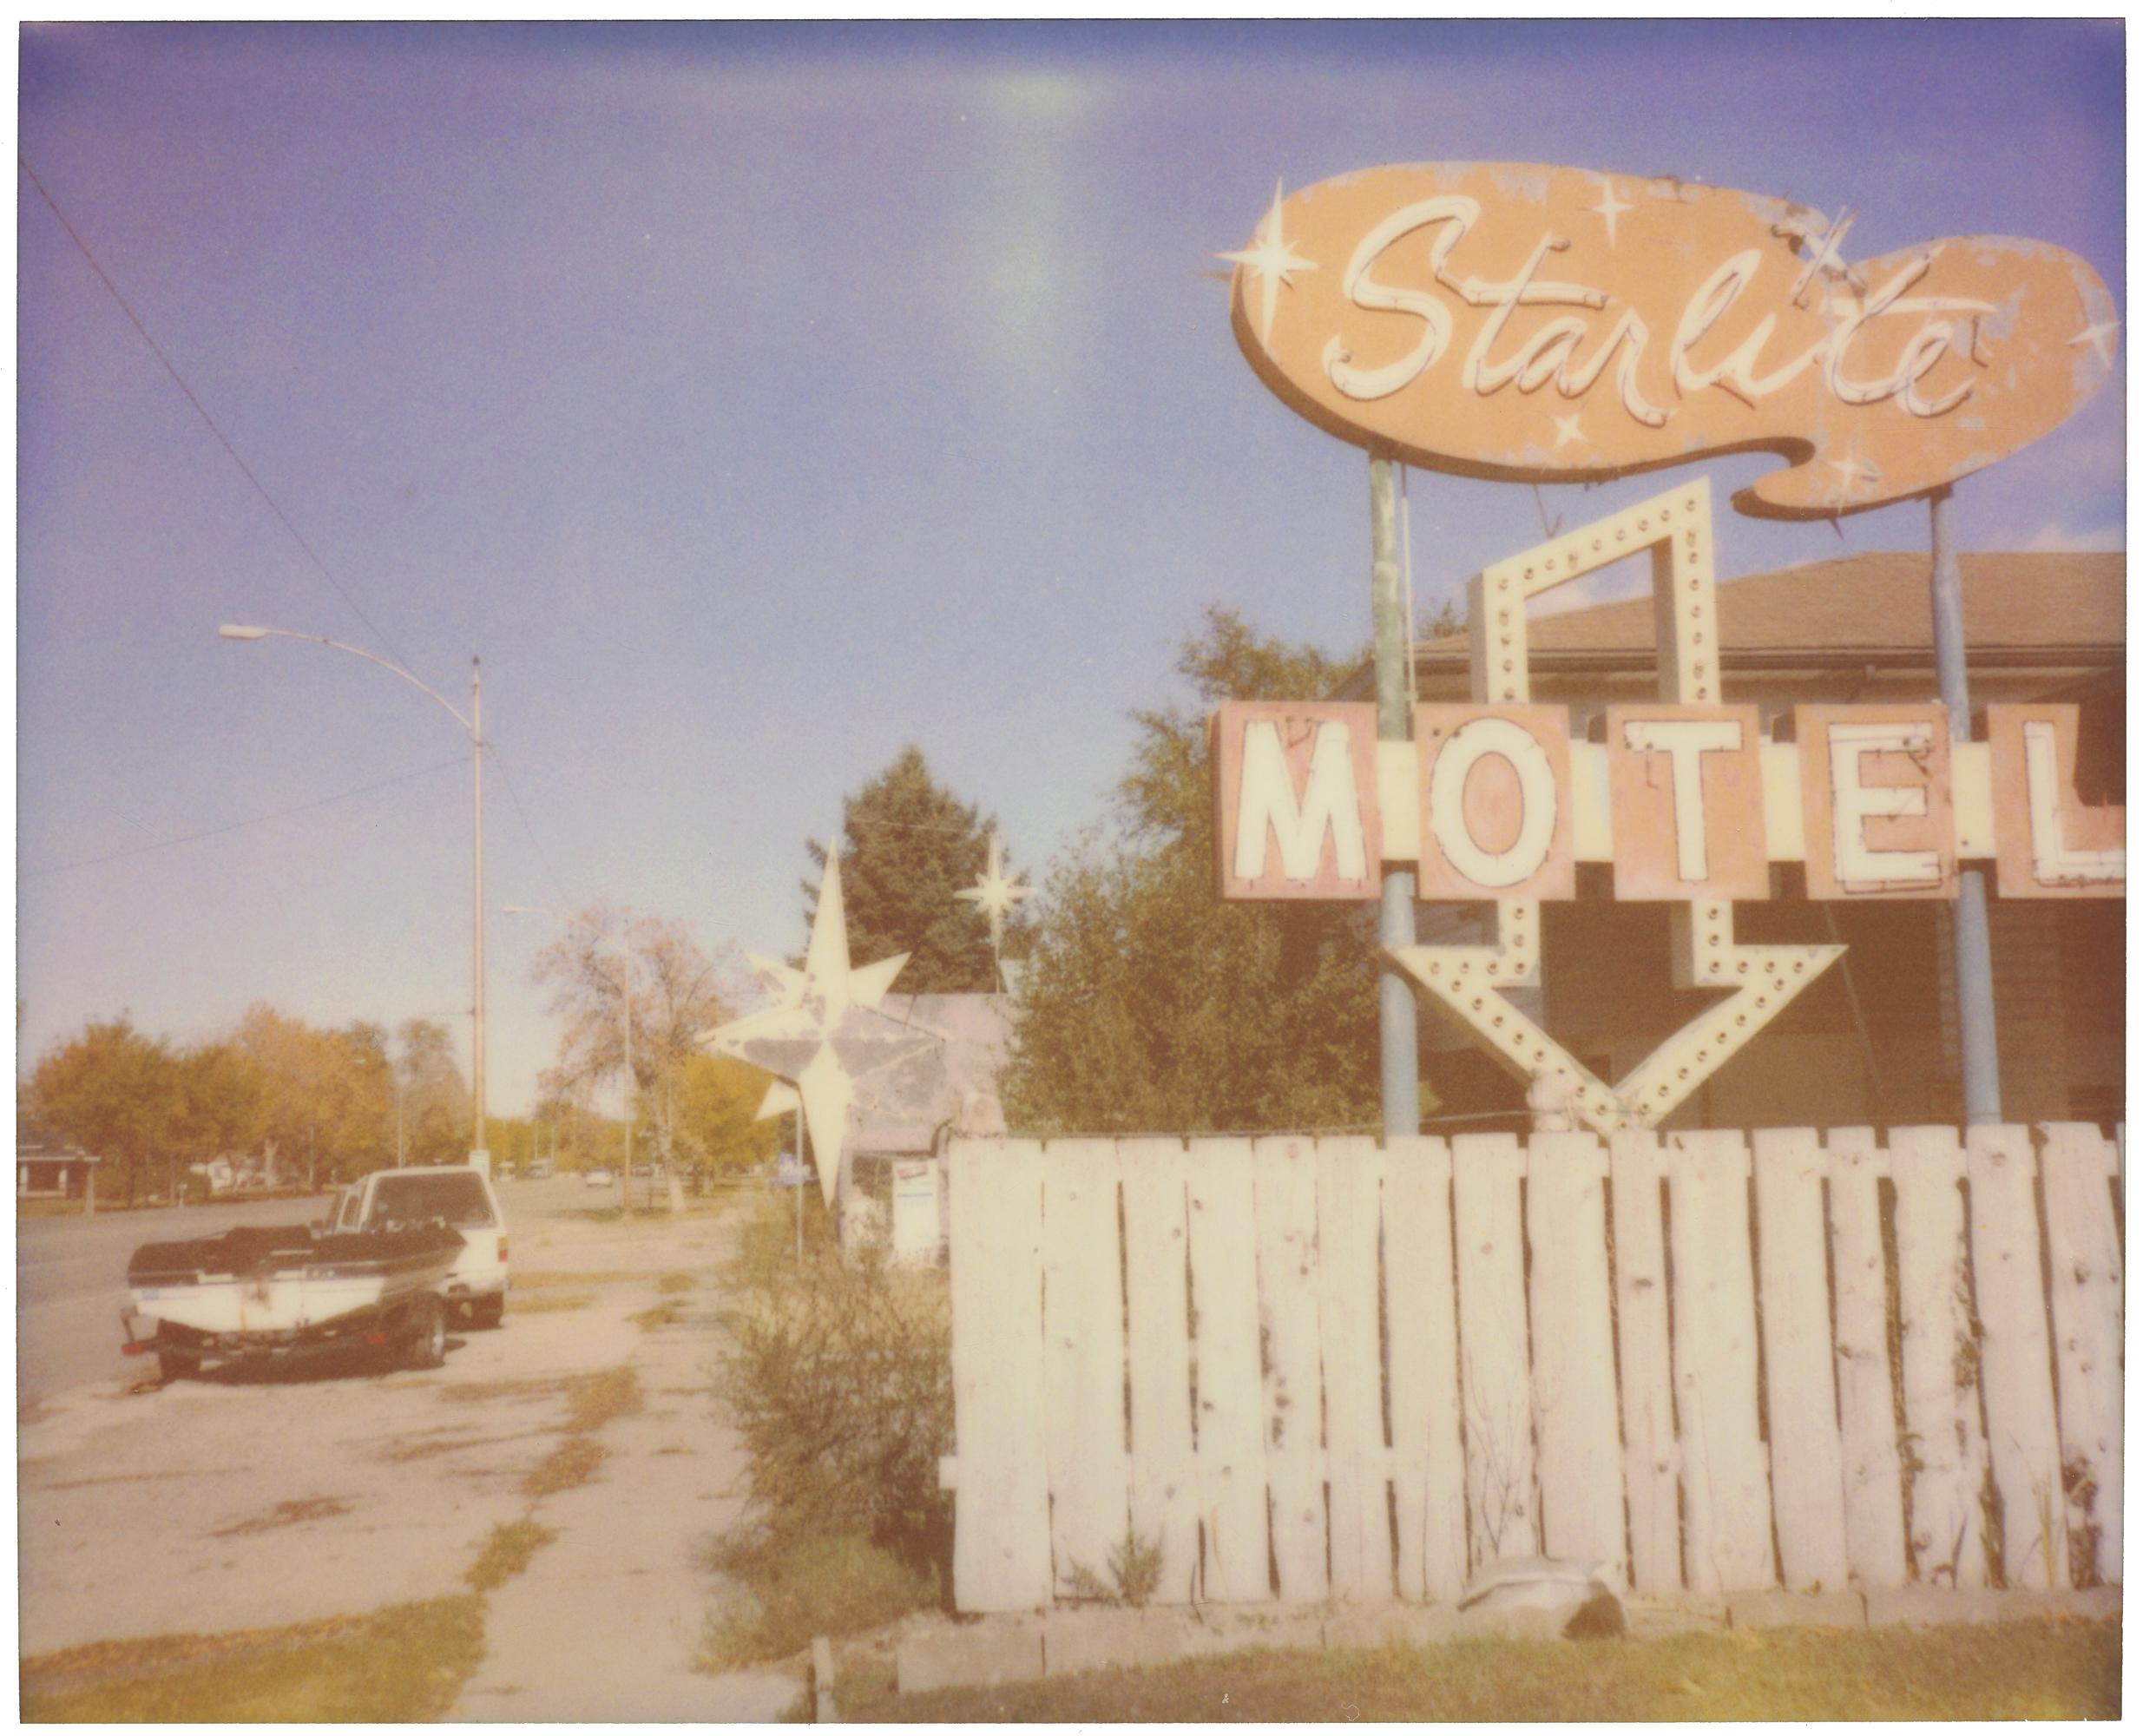 Stefanie Schneider Landscape Photograph - Starlite Motel (California Badlands) - Contemporary, Polaroid, Landscape